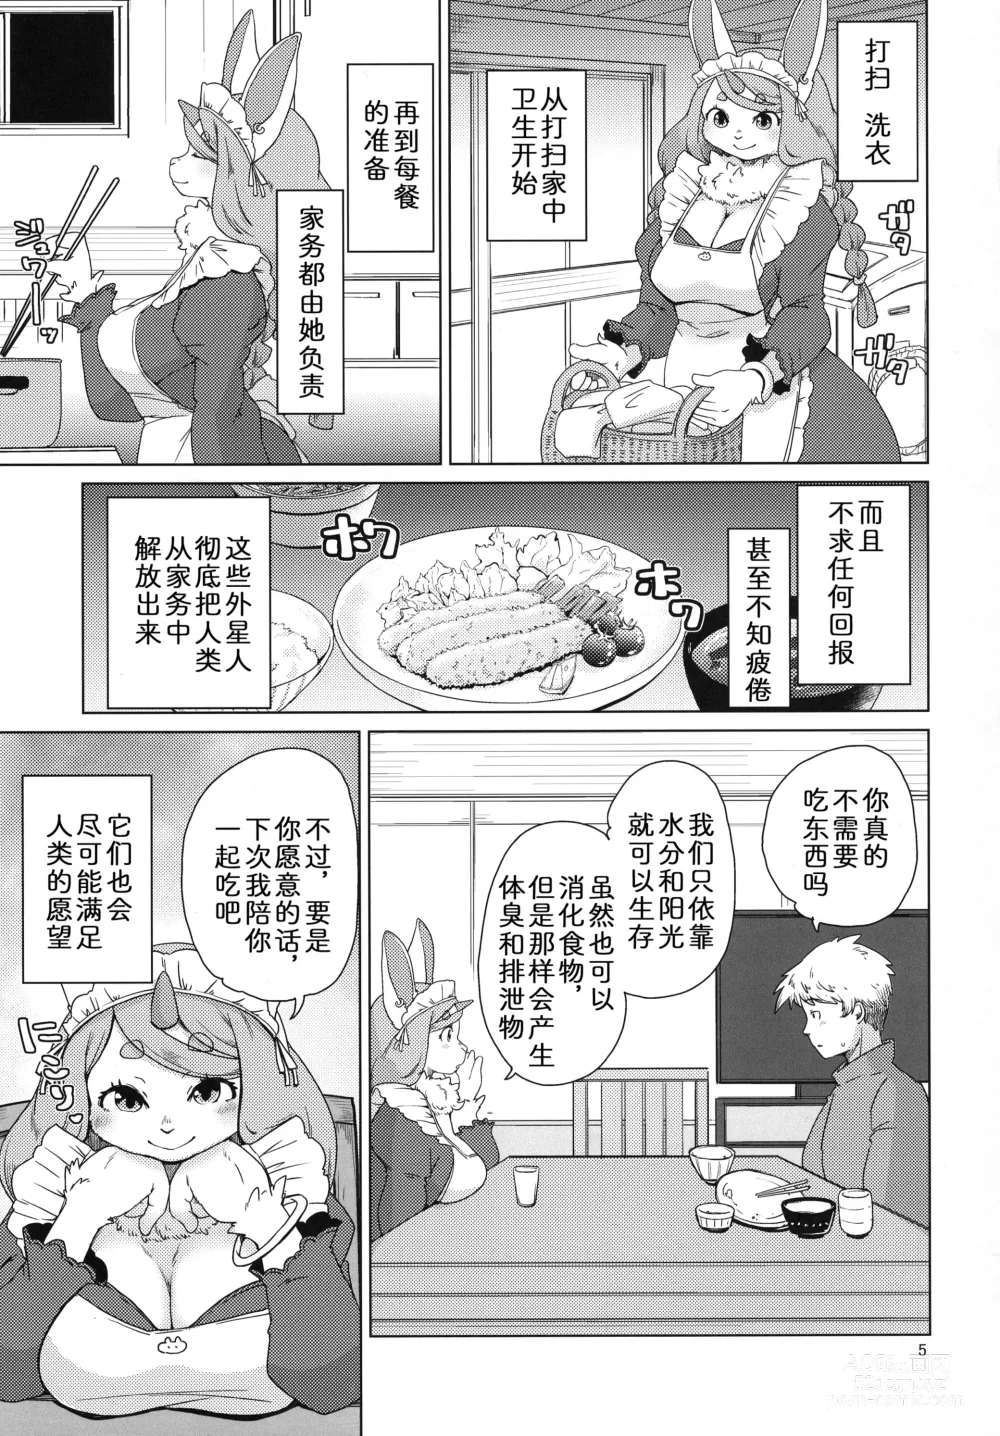 Page 5 of doujinshi 毛茸茸大入侵